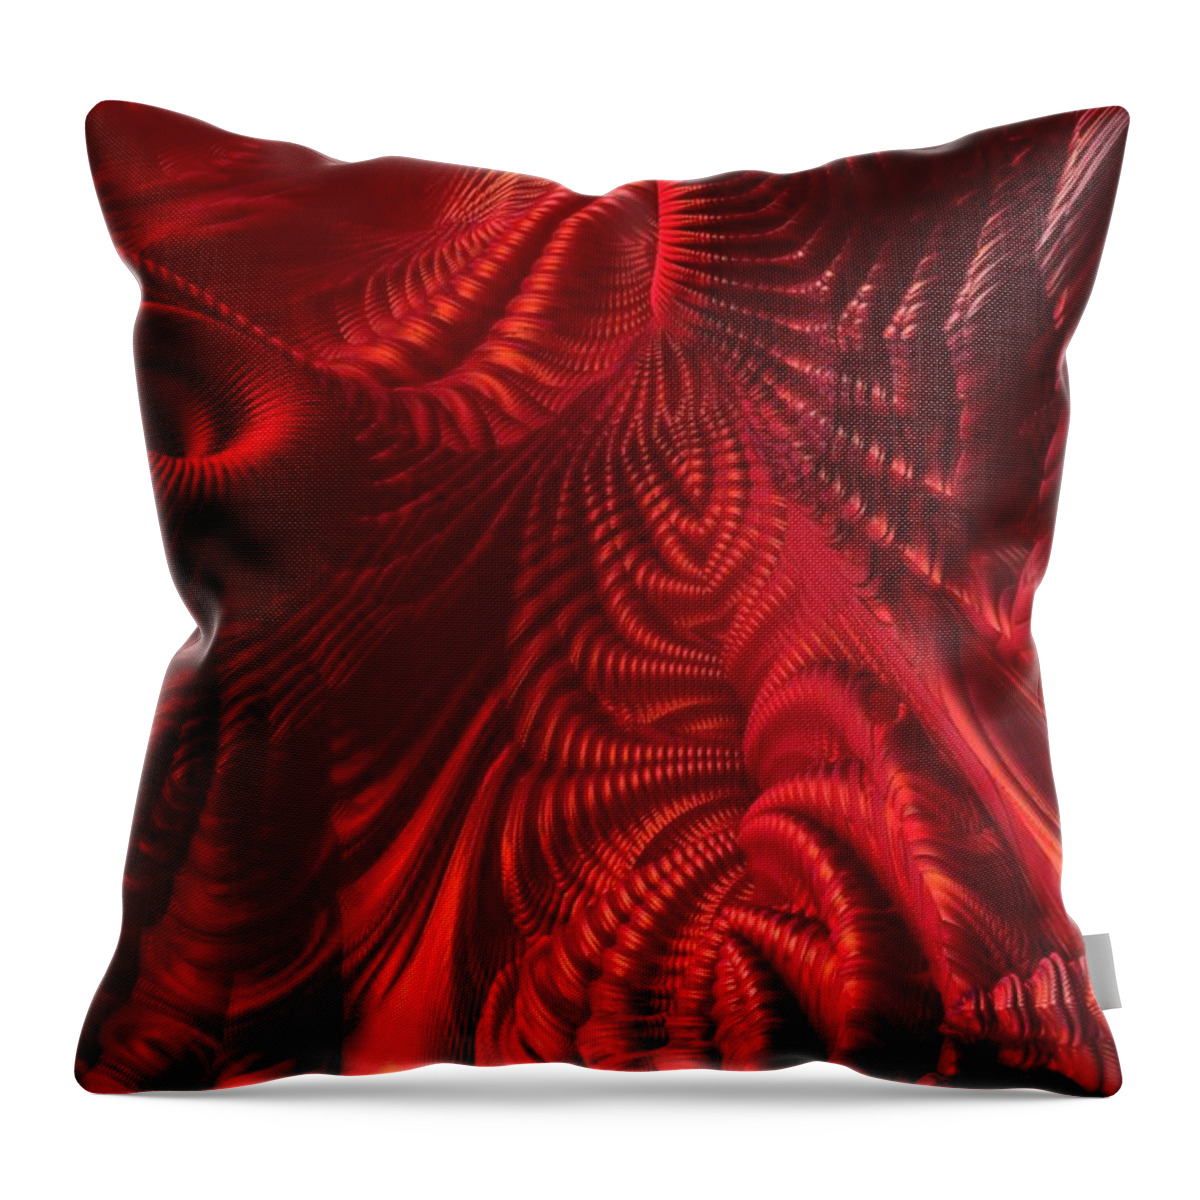 Alien Throw Pillow featuring the digital art World Apart by Lyle Hatch